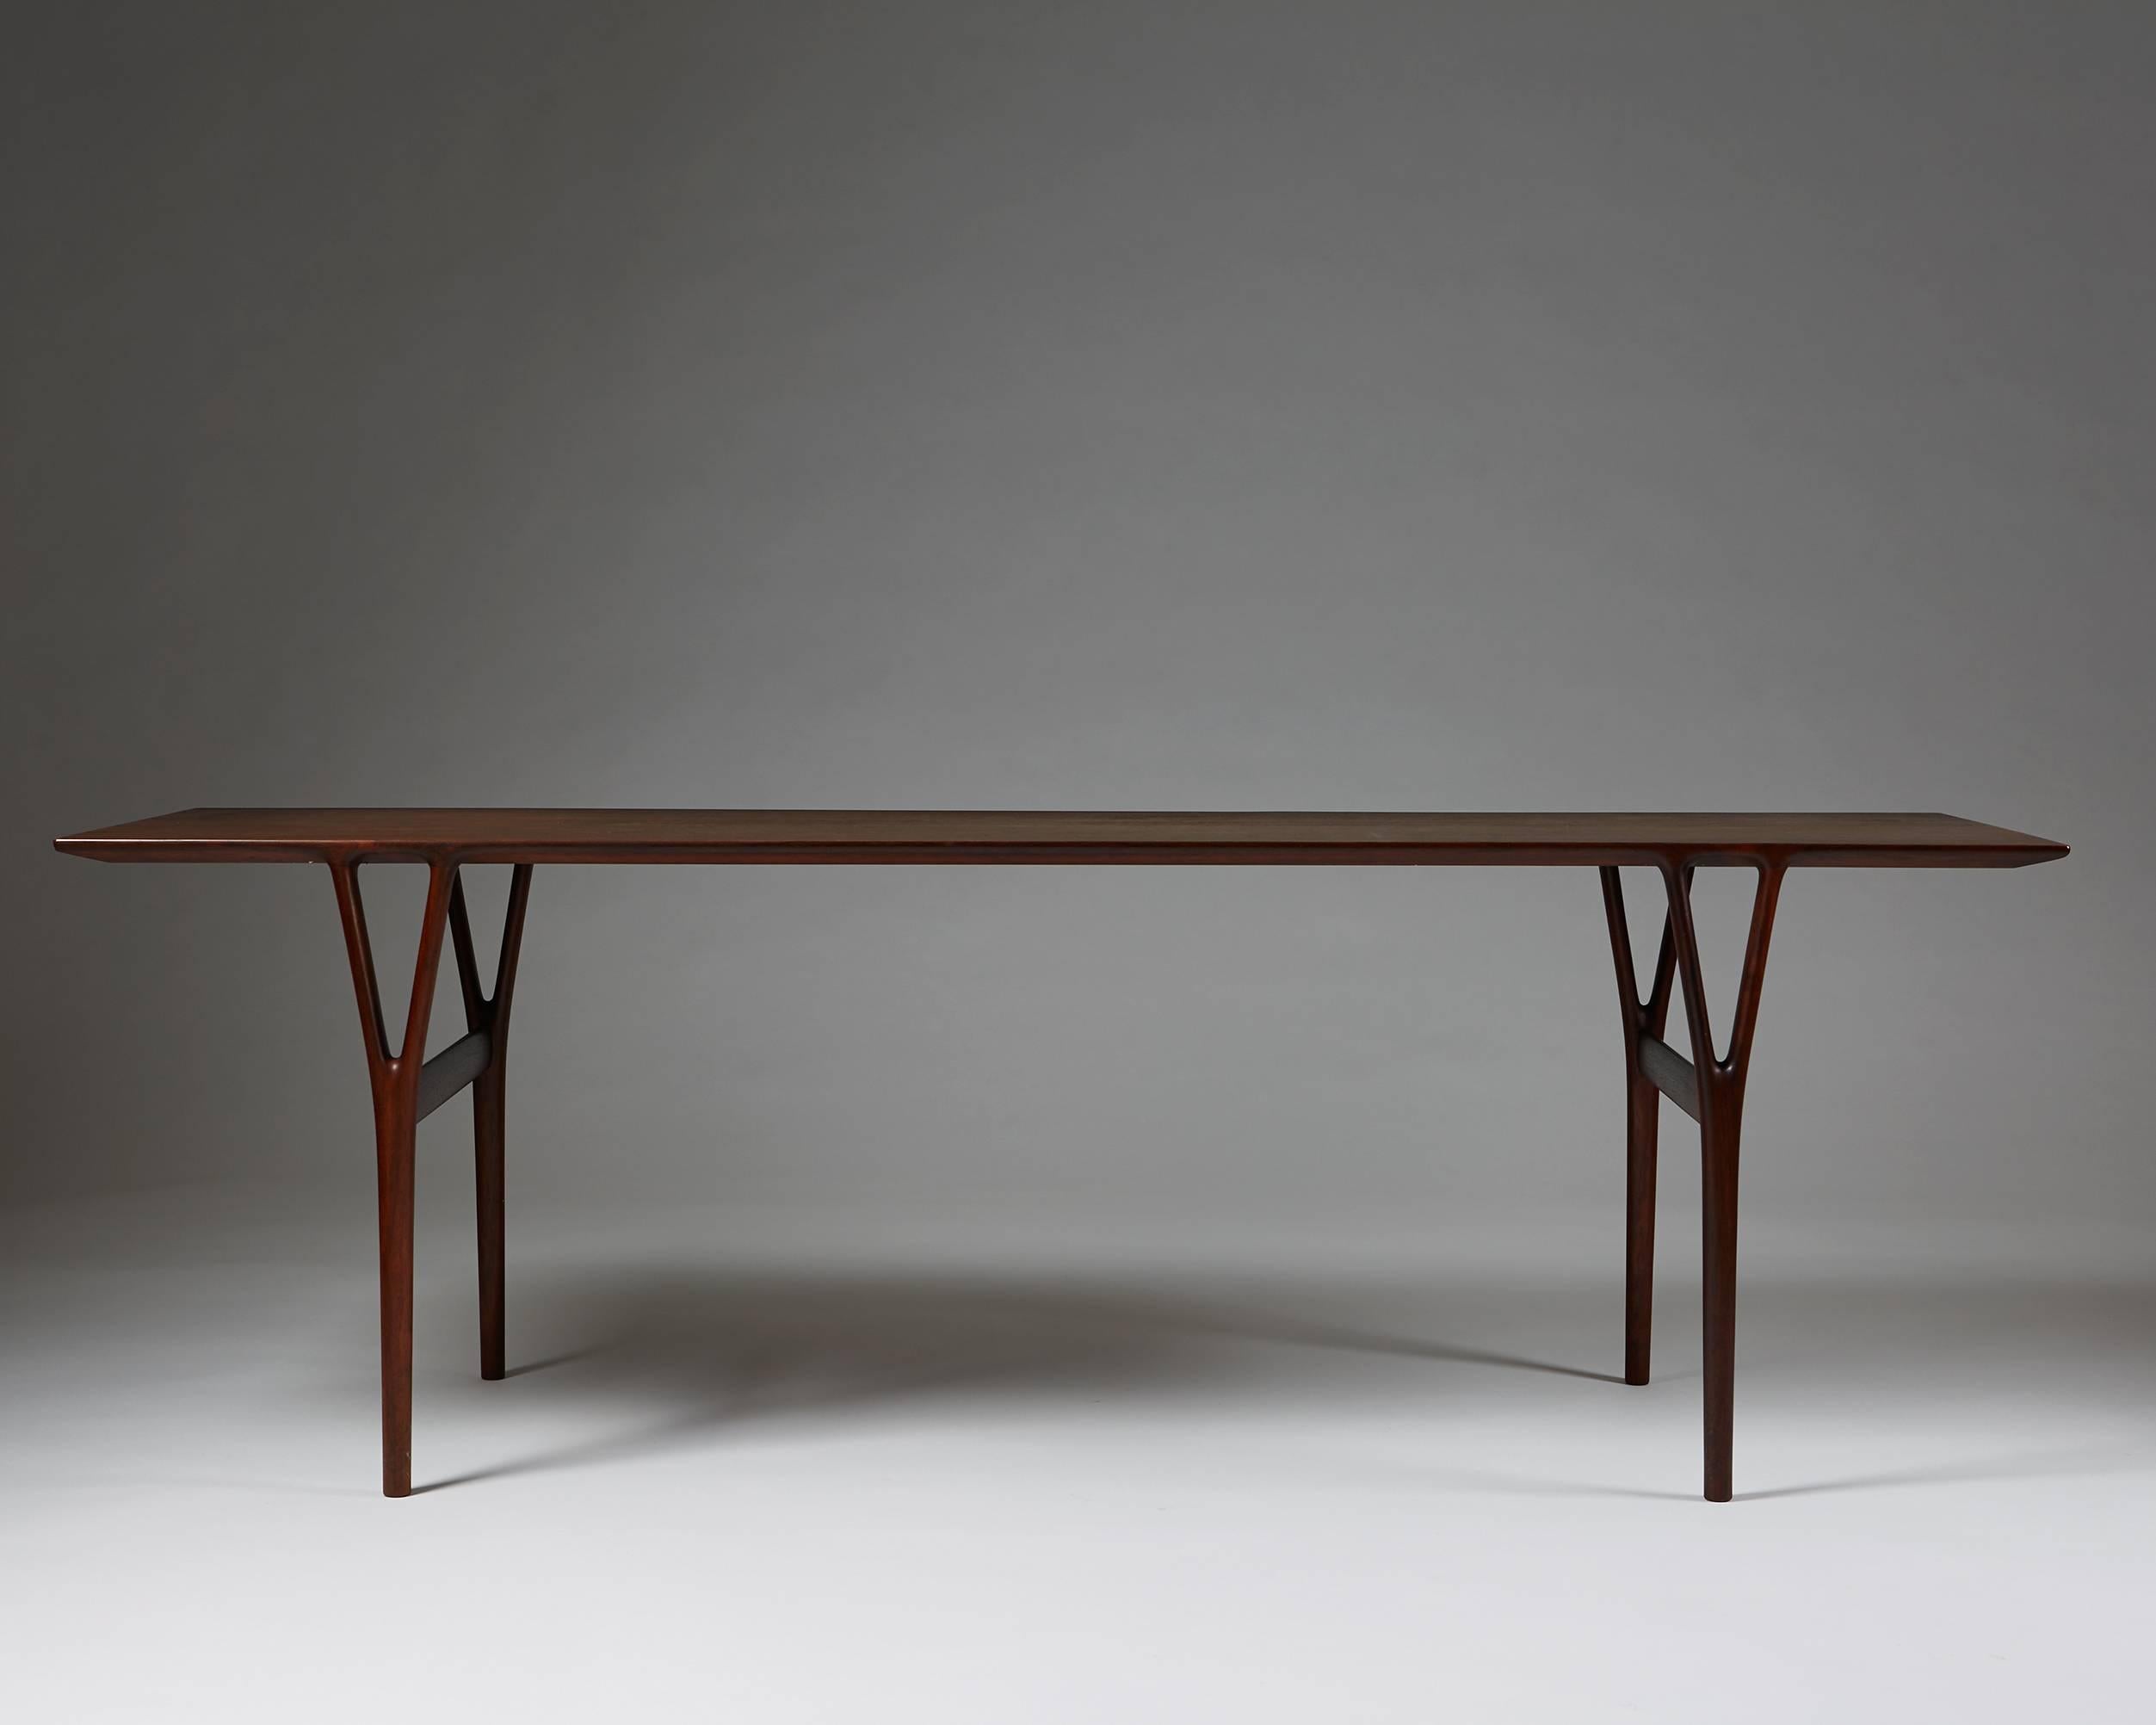 Occasional table designed by Helge Vestergaard Jensen, Denmark, 1950s
Rosewood